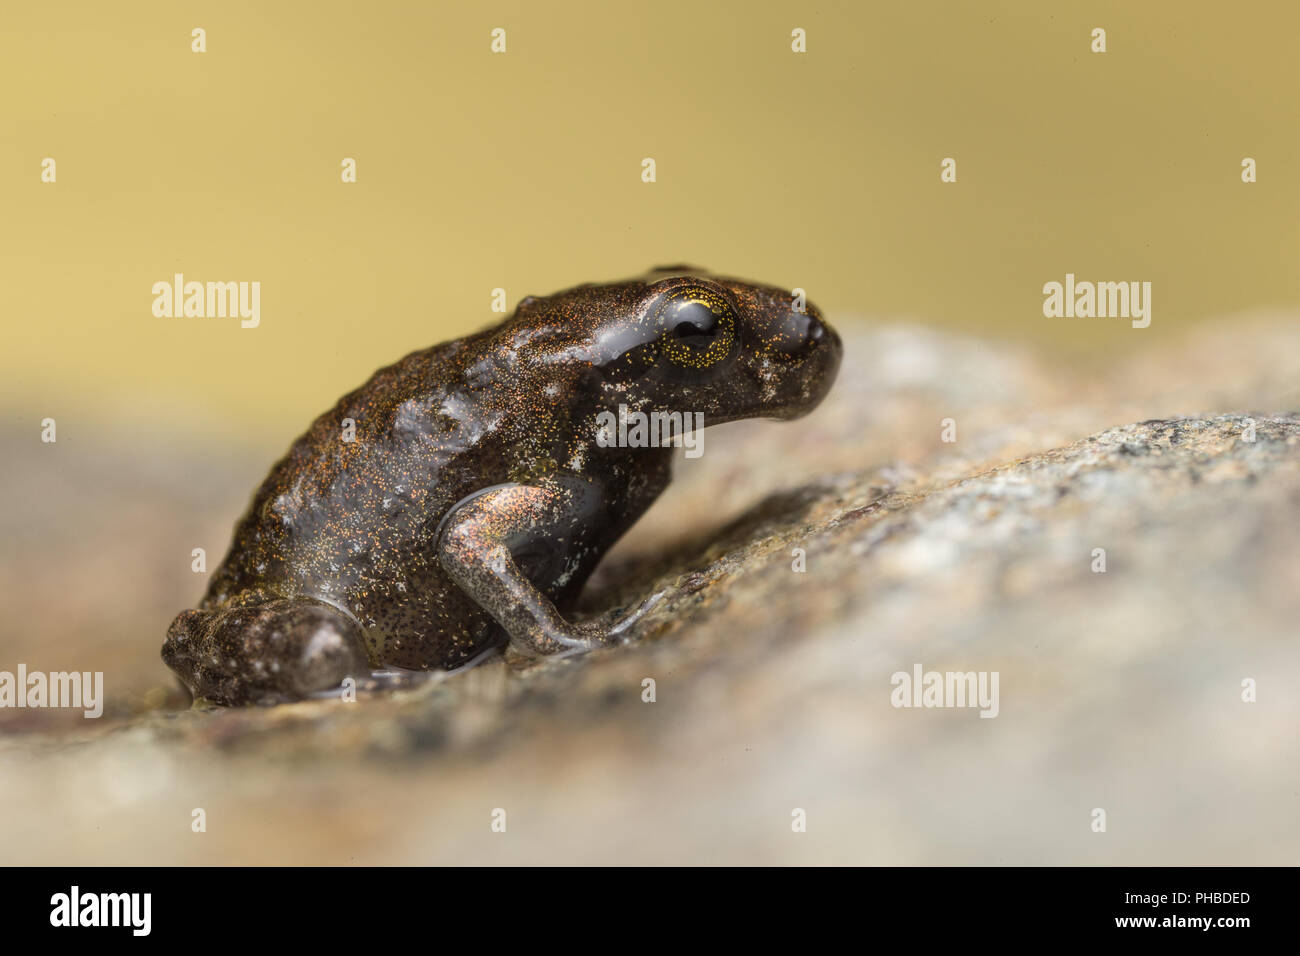 Tiny frog stock photo. Image of amphibian, hiding, nature - 98826642